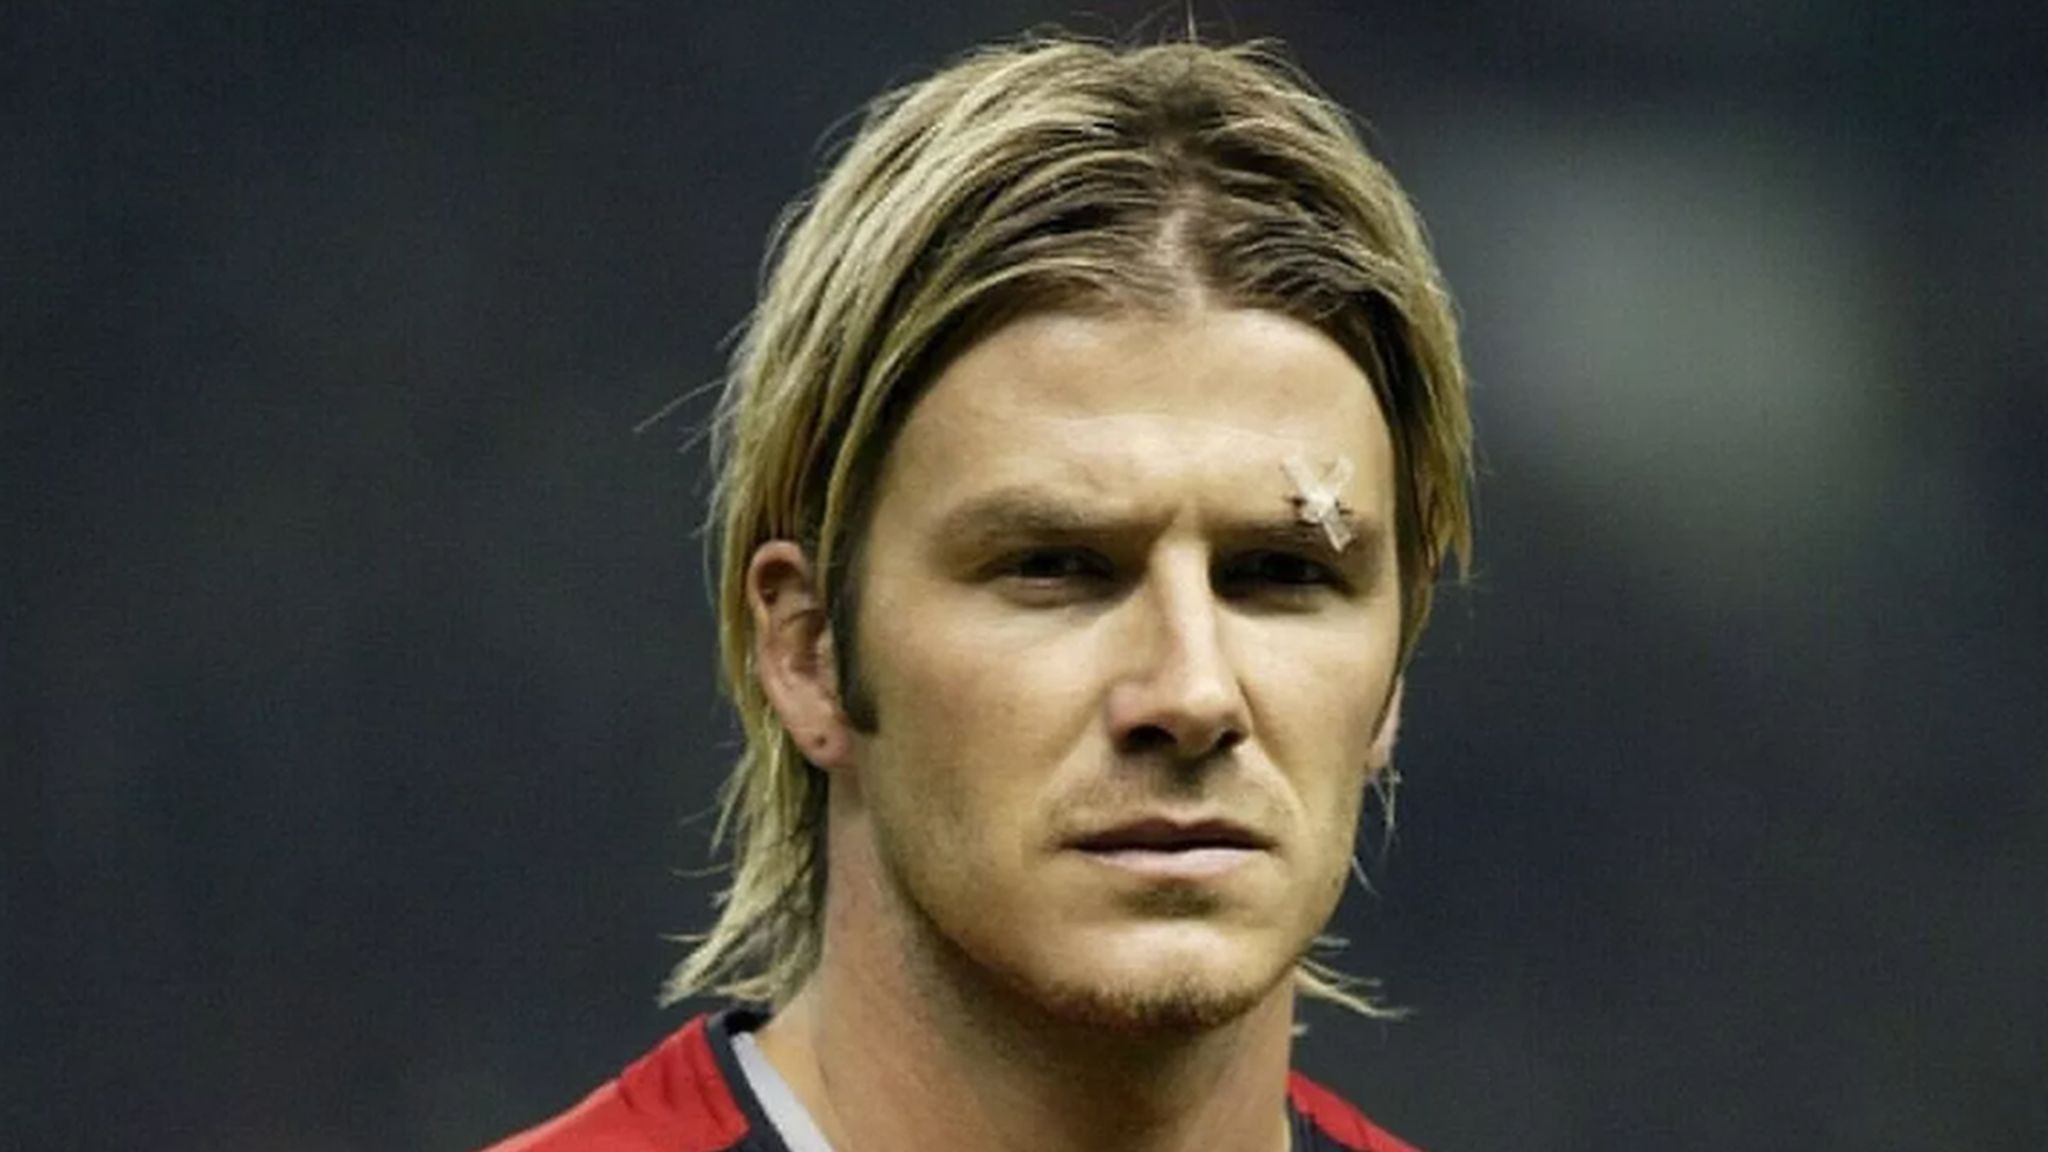 David Beckham with stitches above his eye